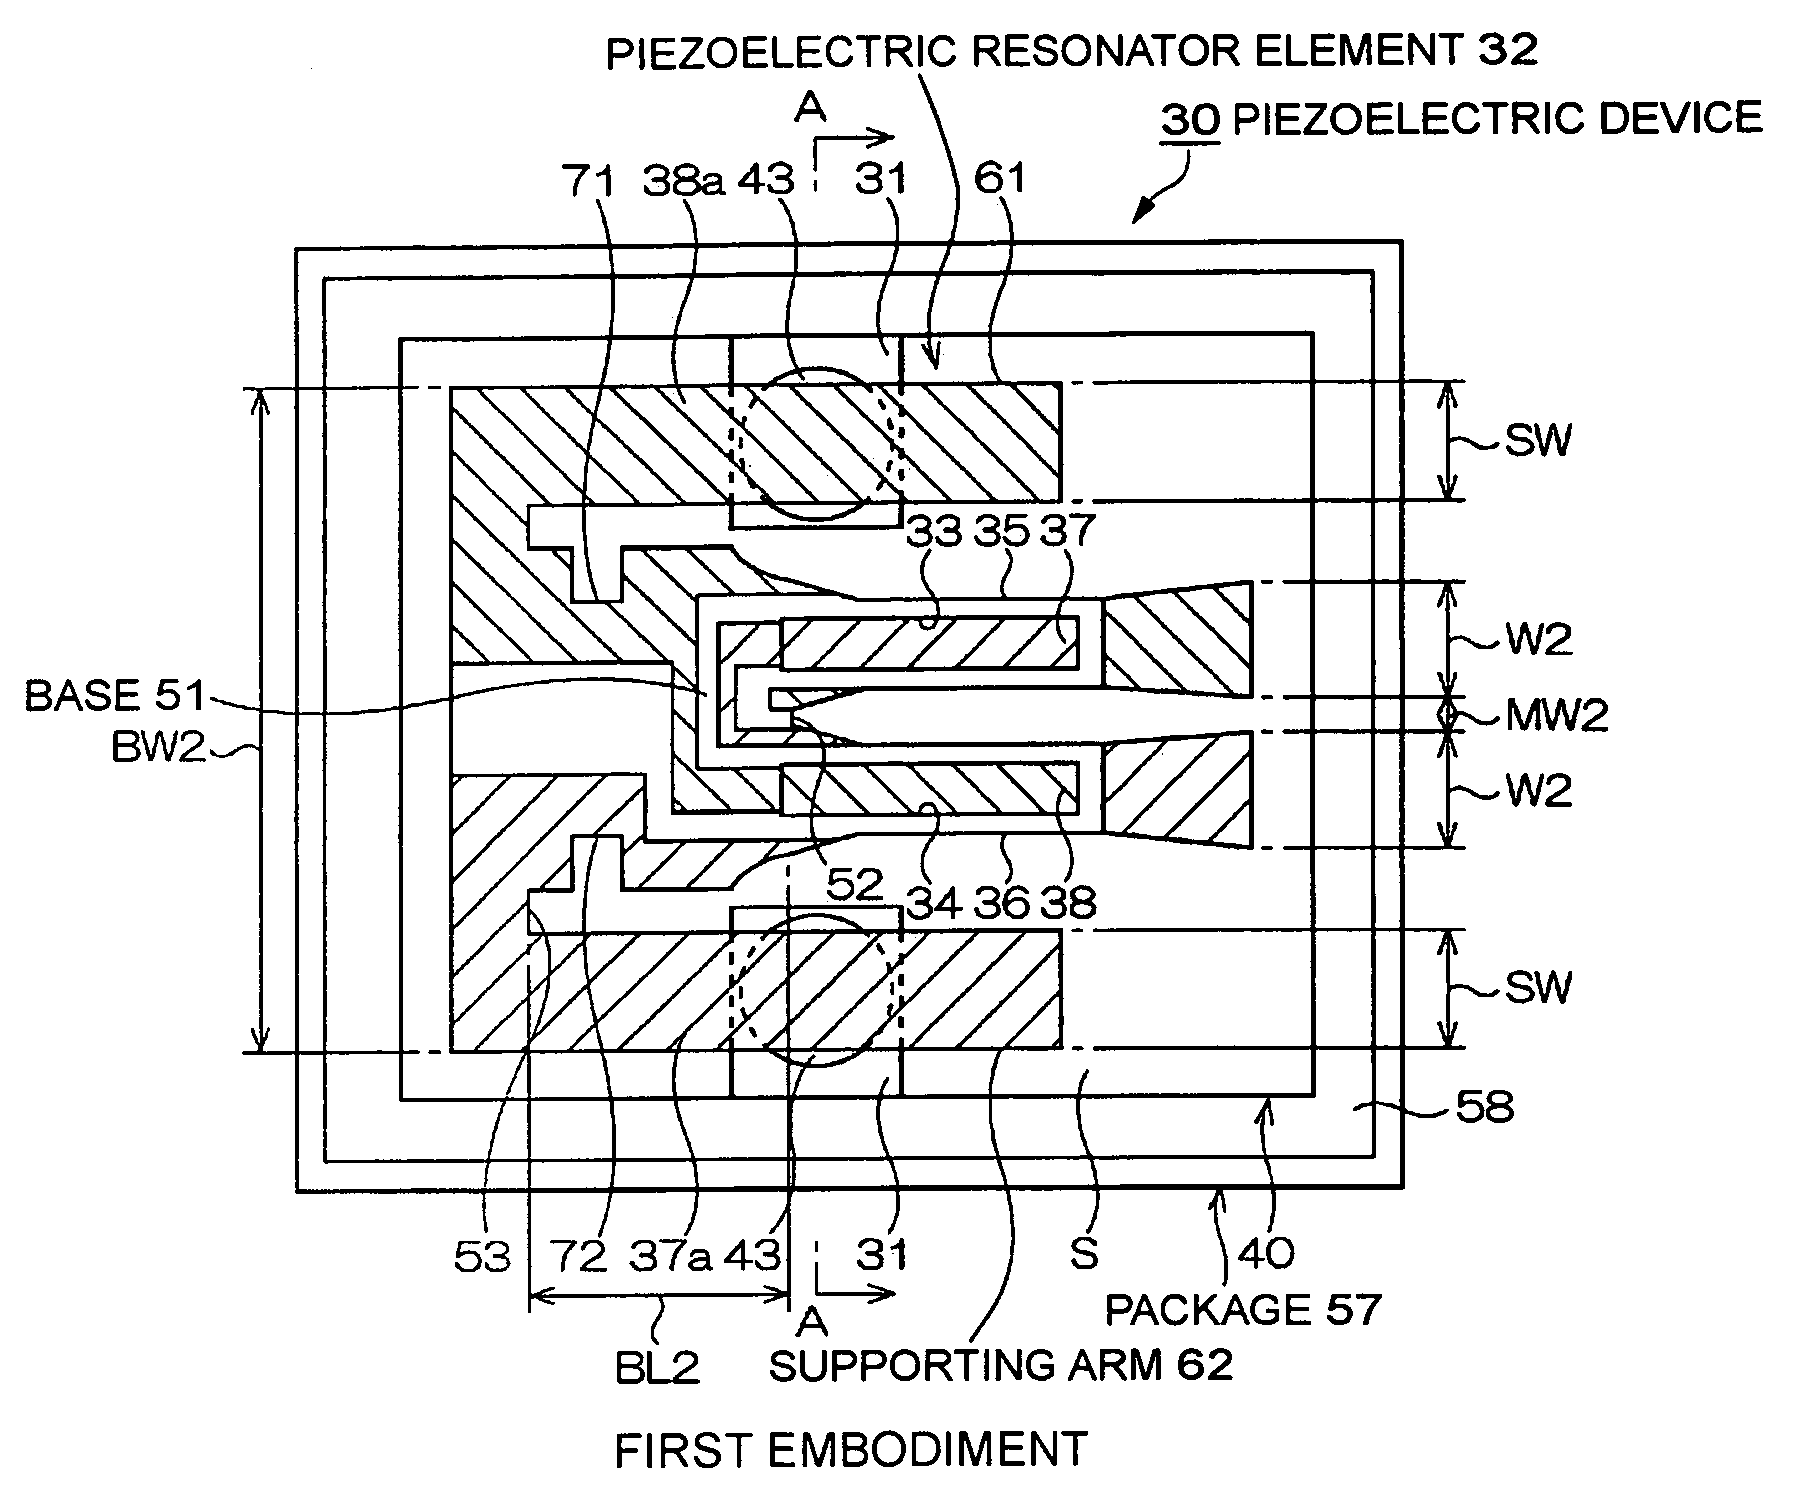 Piezoelectric resonator element and piezoelectric device